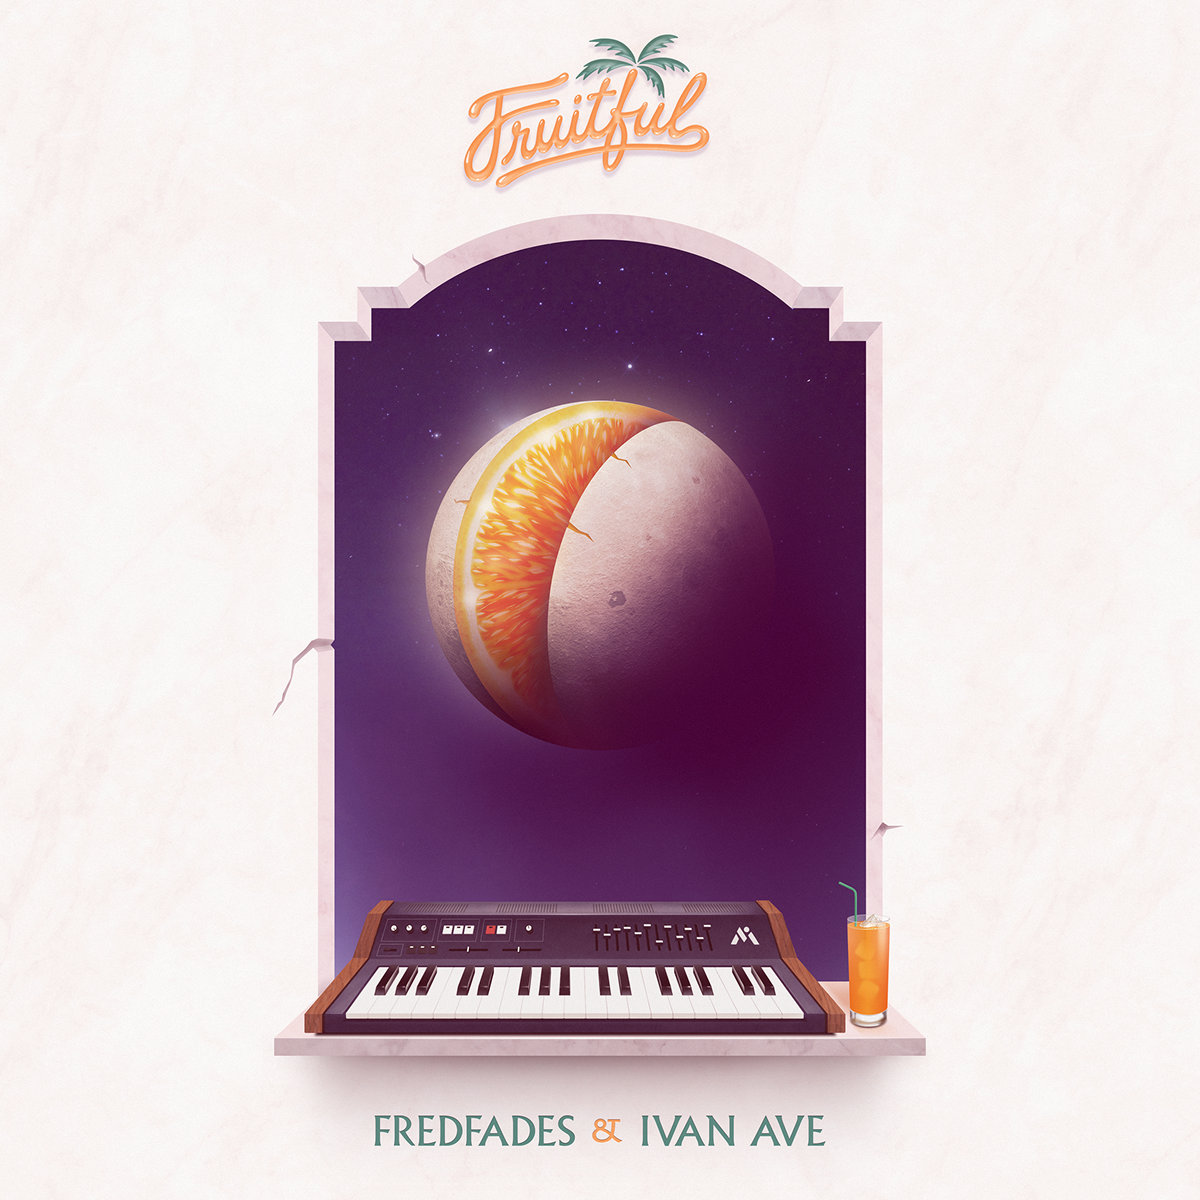 Fredfades & Ivan Ave - "Fruitful" (Release)